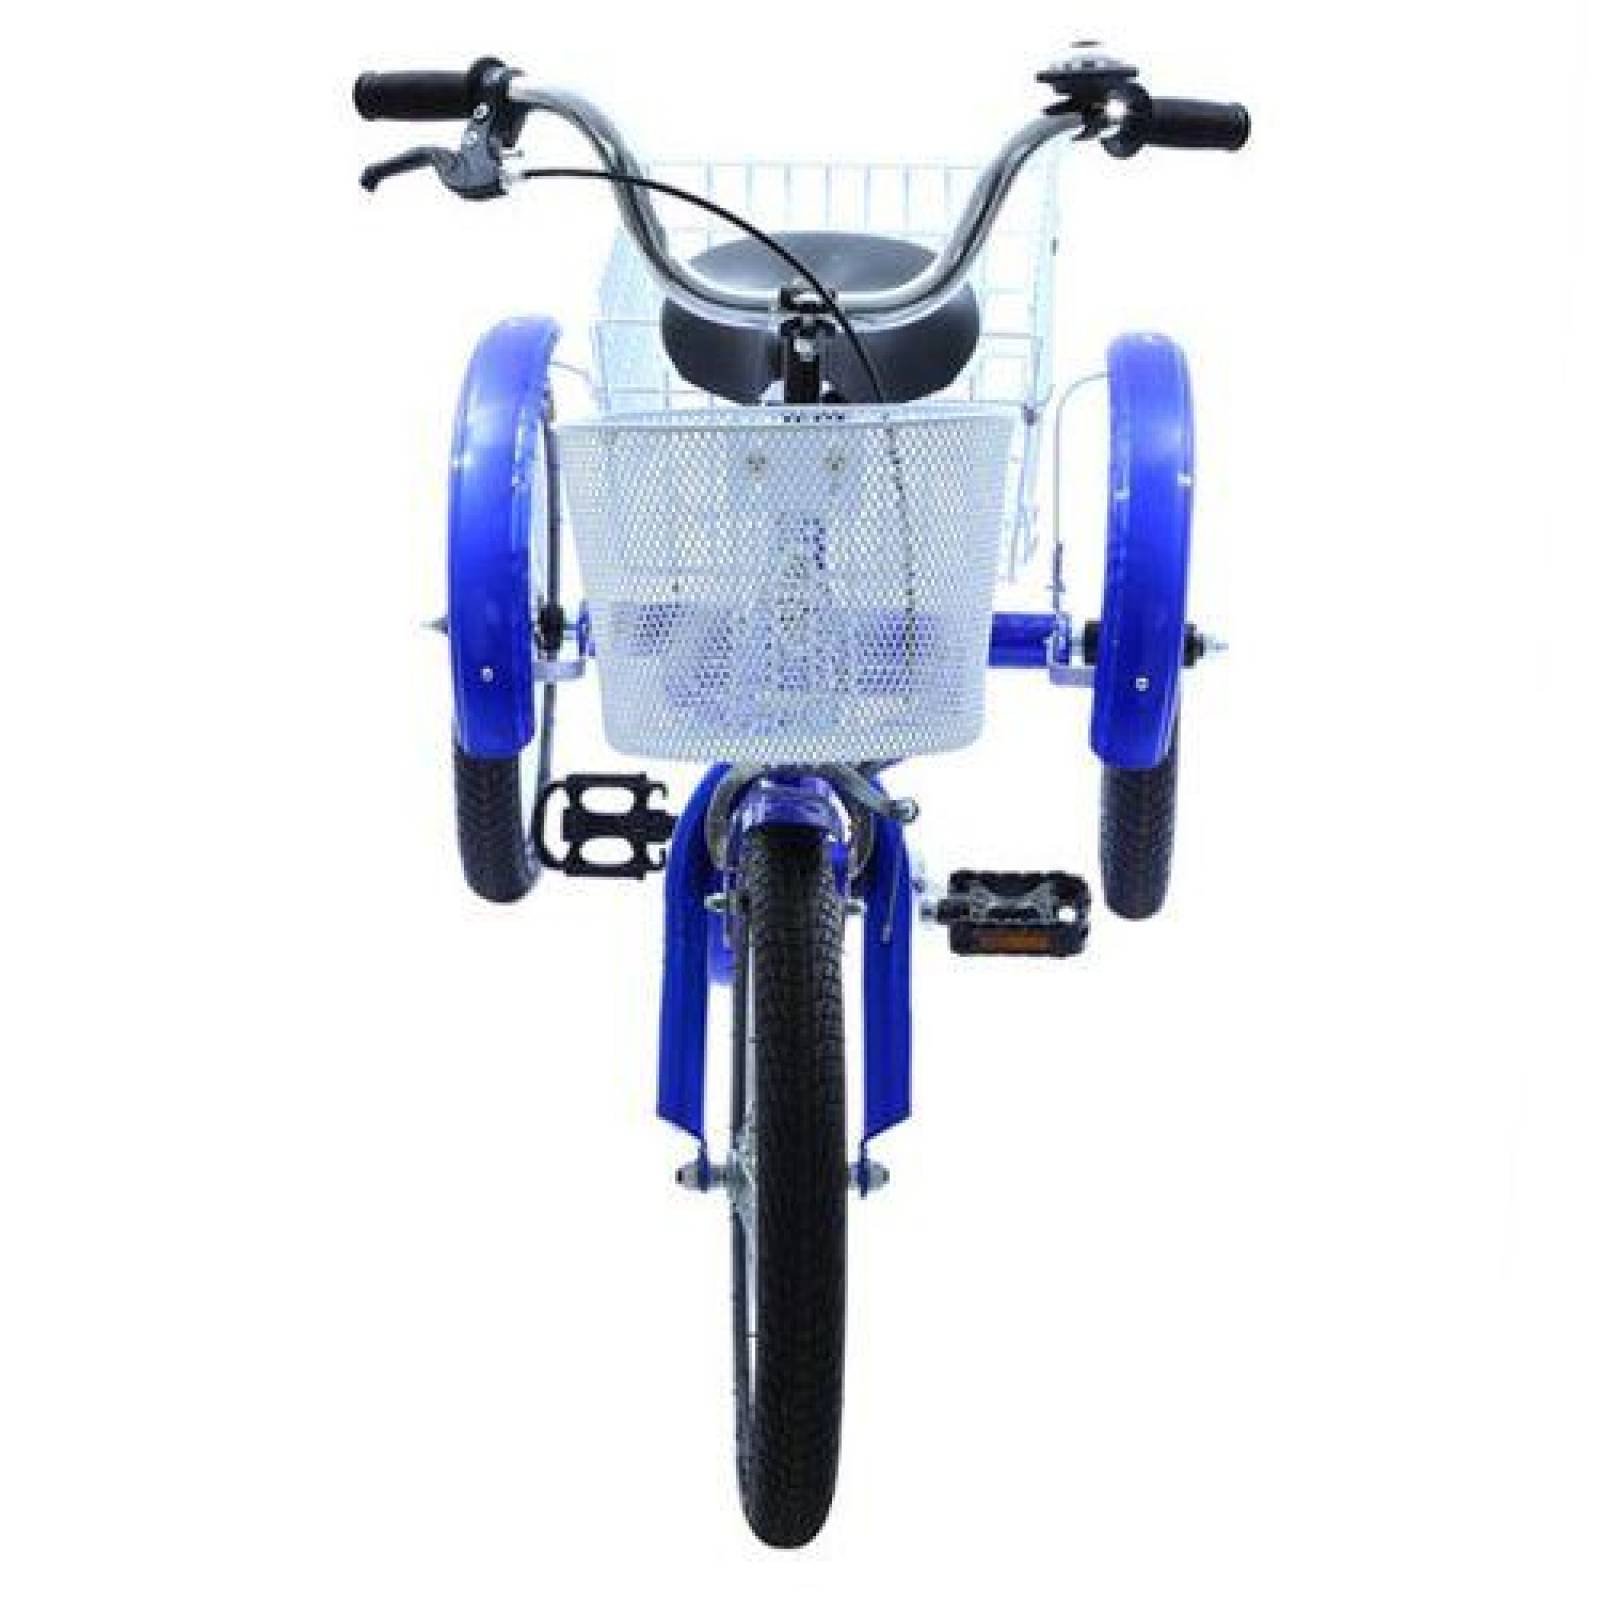 Tricicleta R16 Con Canasta Trasera Pl7013g Azul 